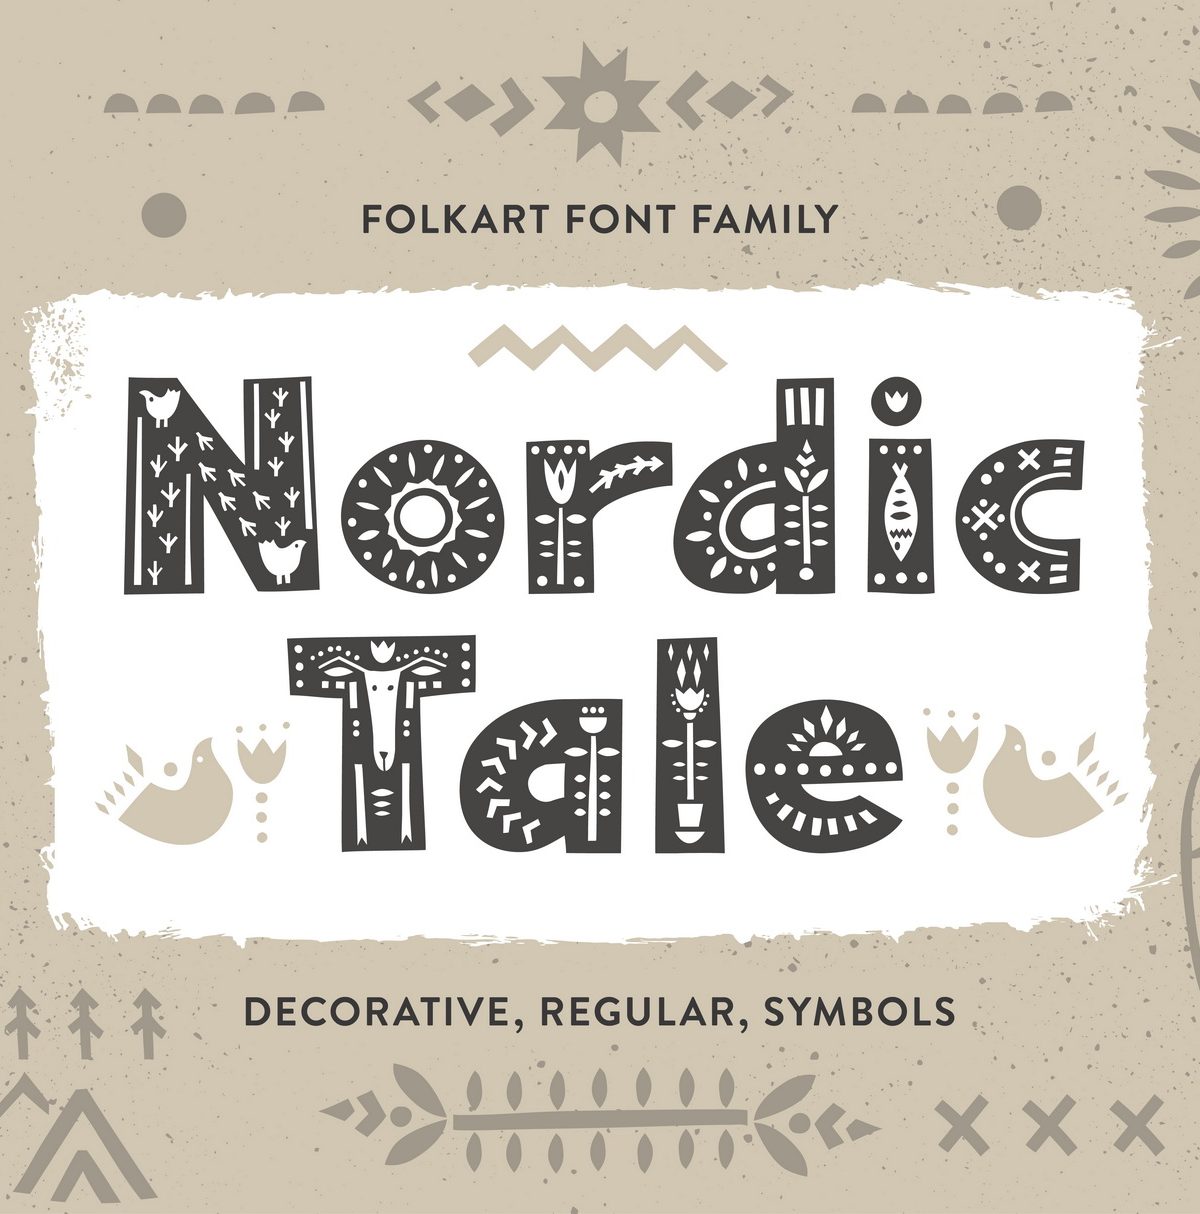 Nordic Tale – Folkart Font FamilyOther Font素材中国精选英文字体